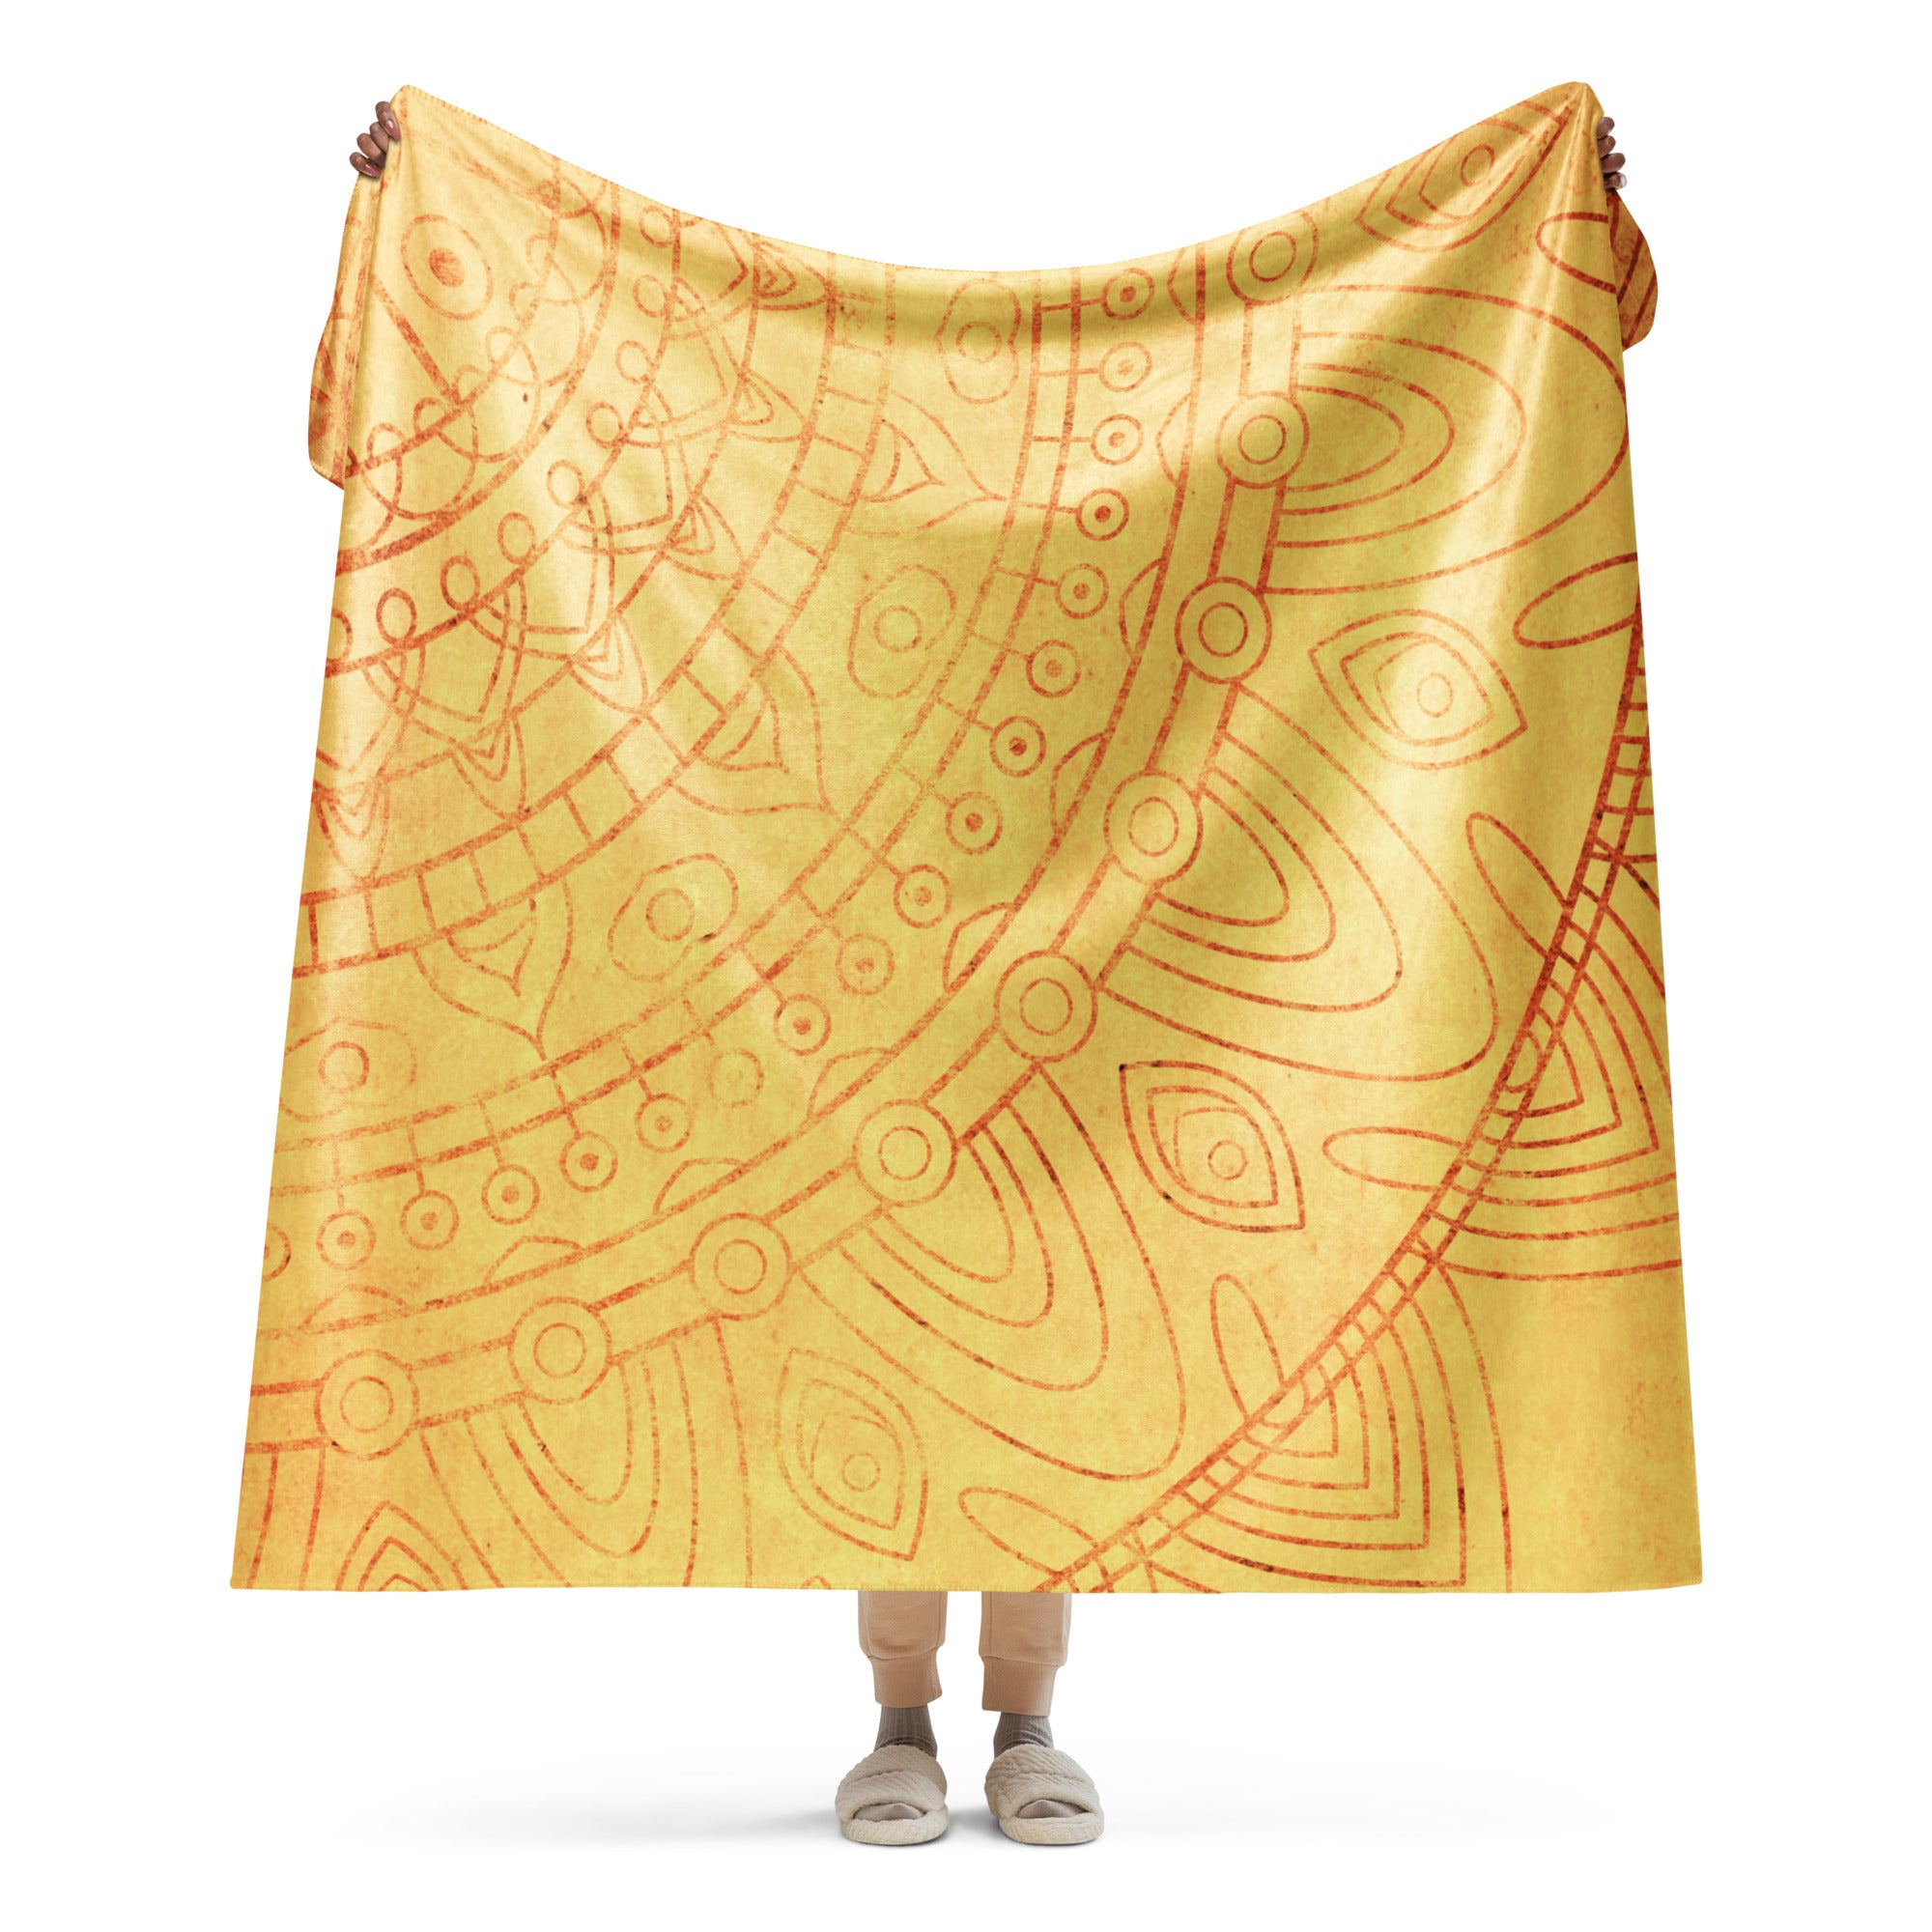 Sherpa Mandala Symbol blanket